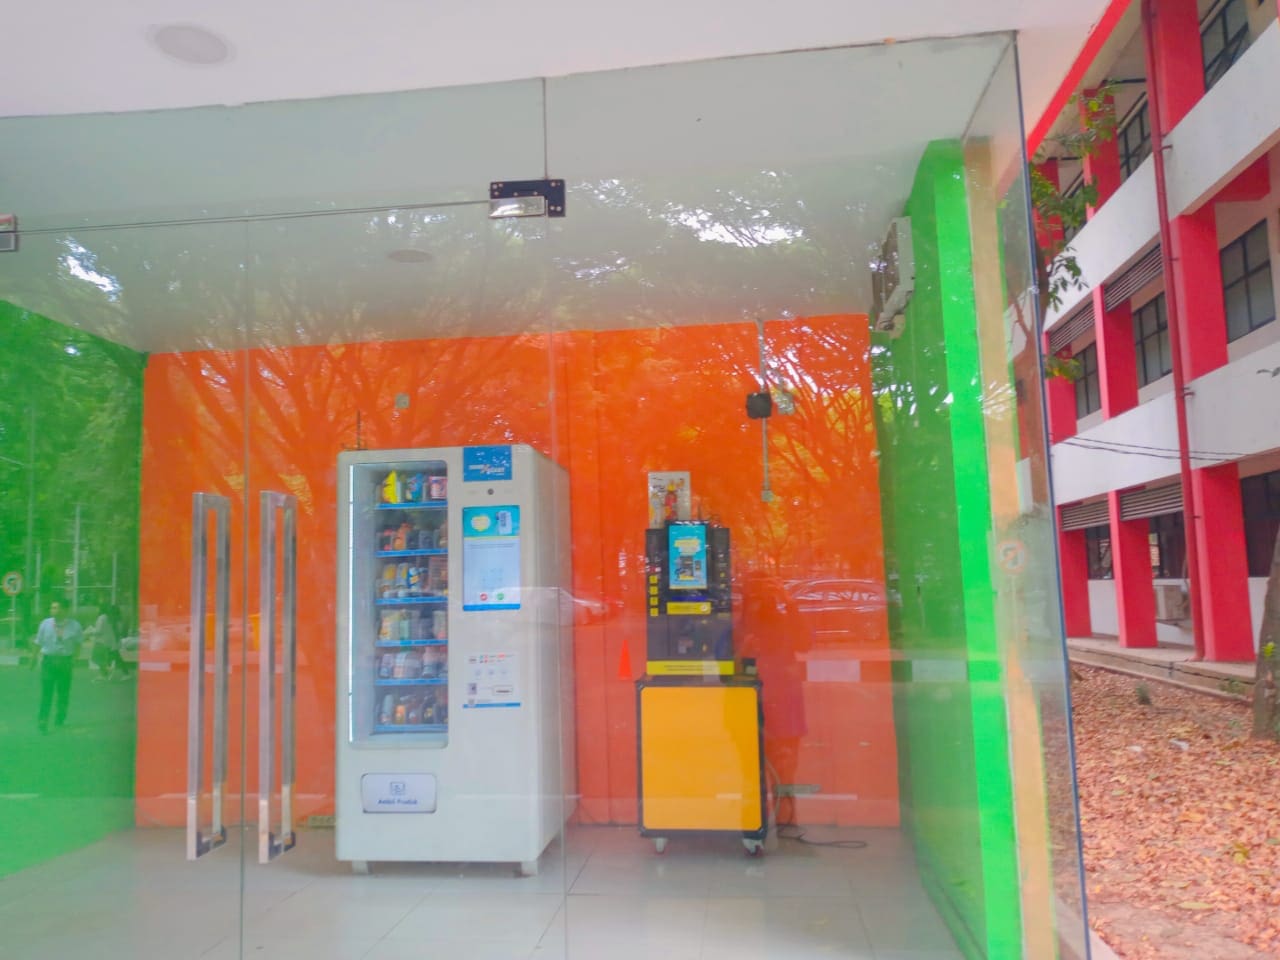 vending machine di area telkom university